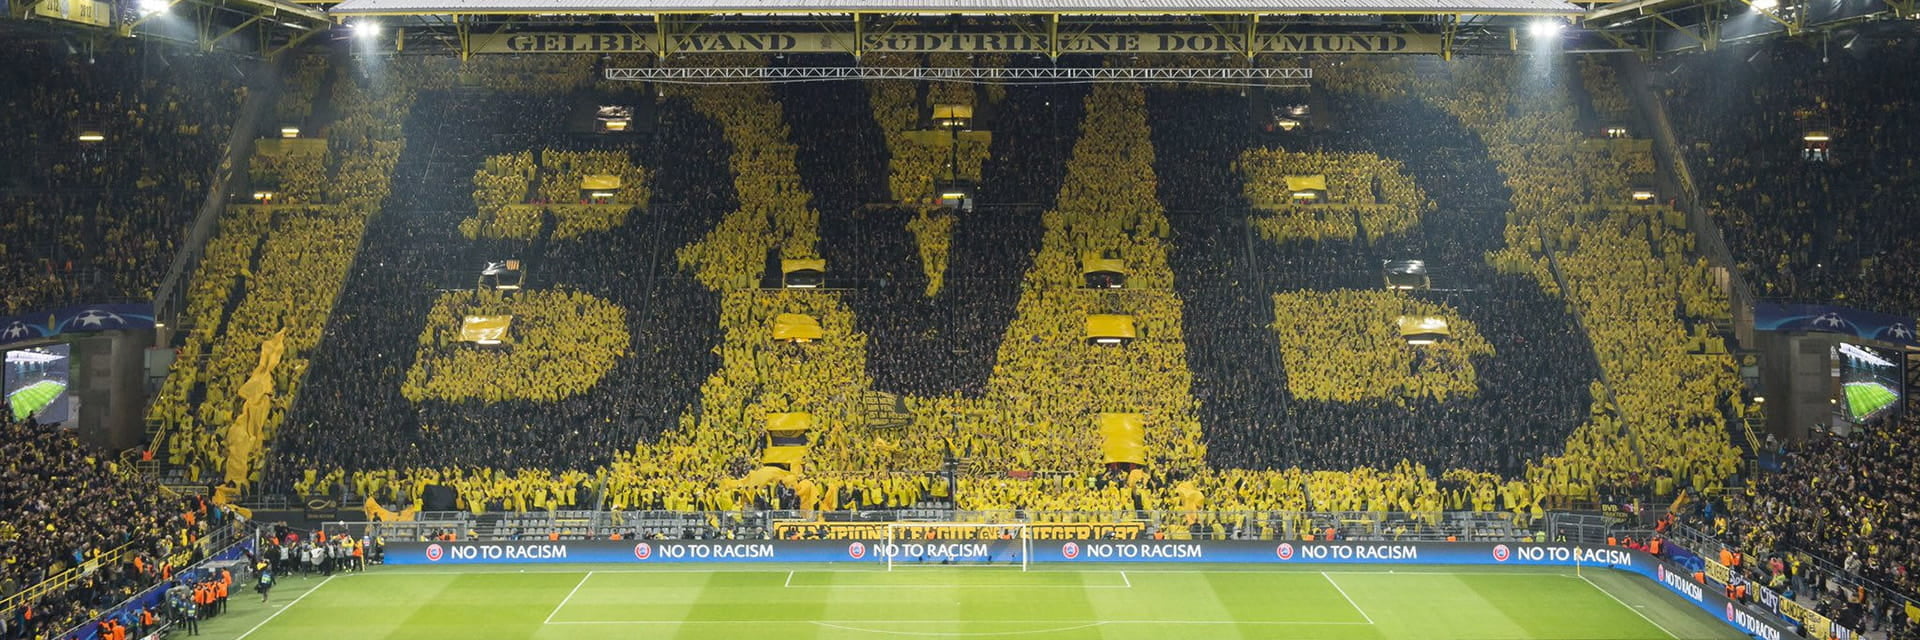 Borussia Dortmund - Manchester City, 2 Oktoberum 21:00